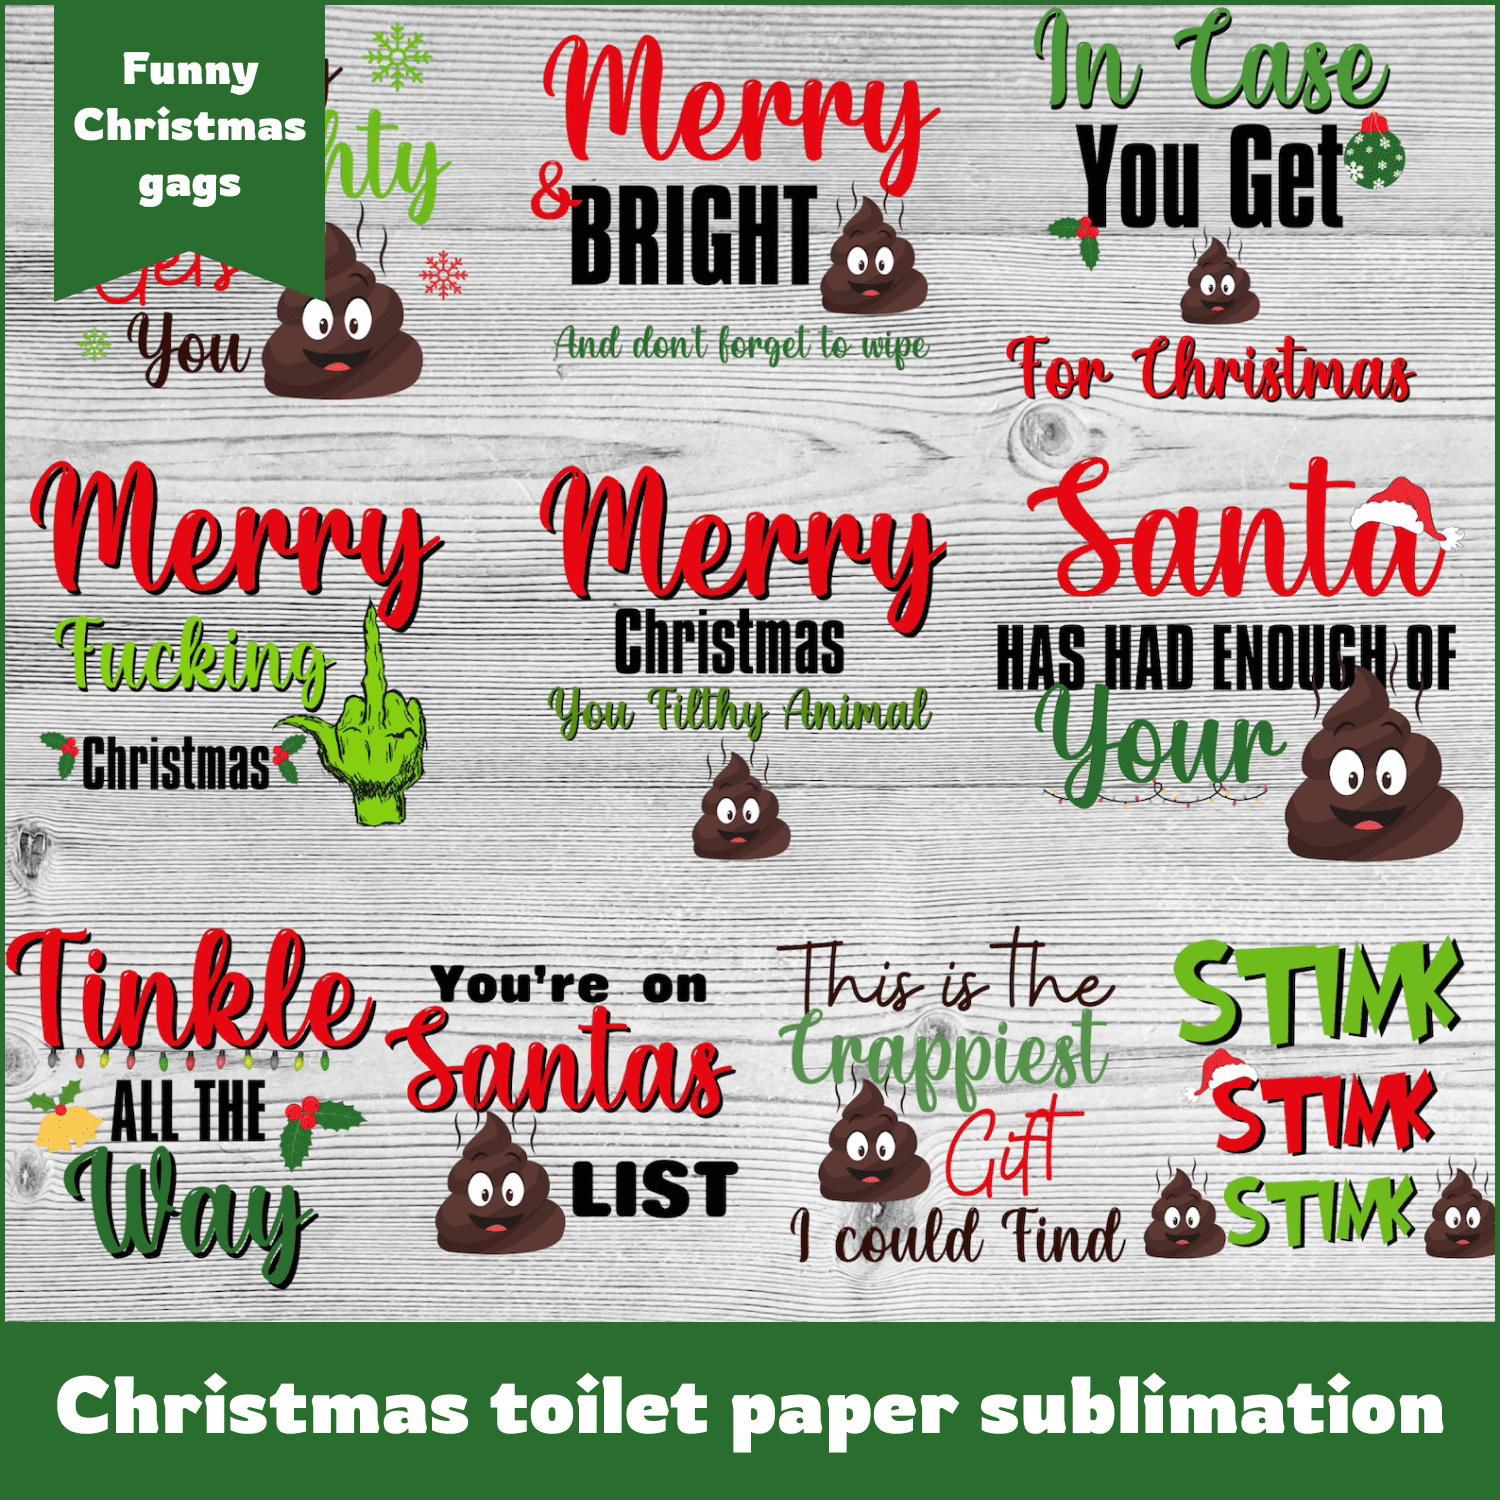 Christmas toilet paper sublimation.